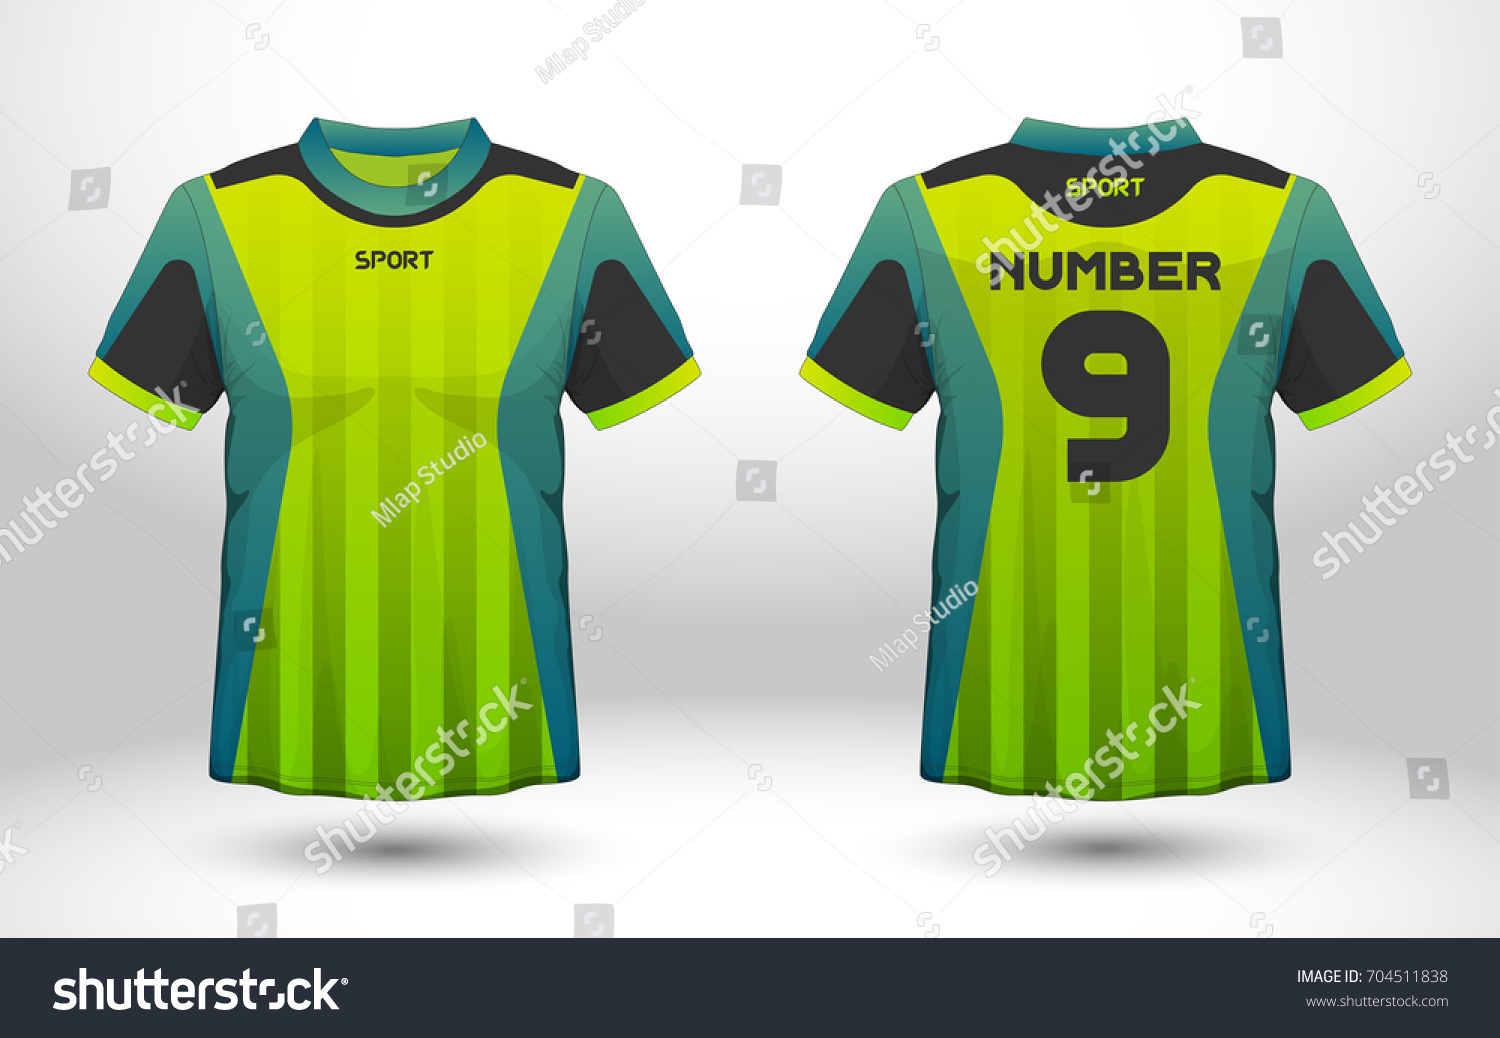 Green Black Layout Football Sport Tshirt Stock Vector 704511838 ...